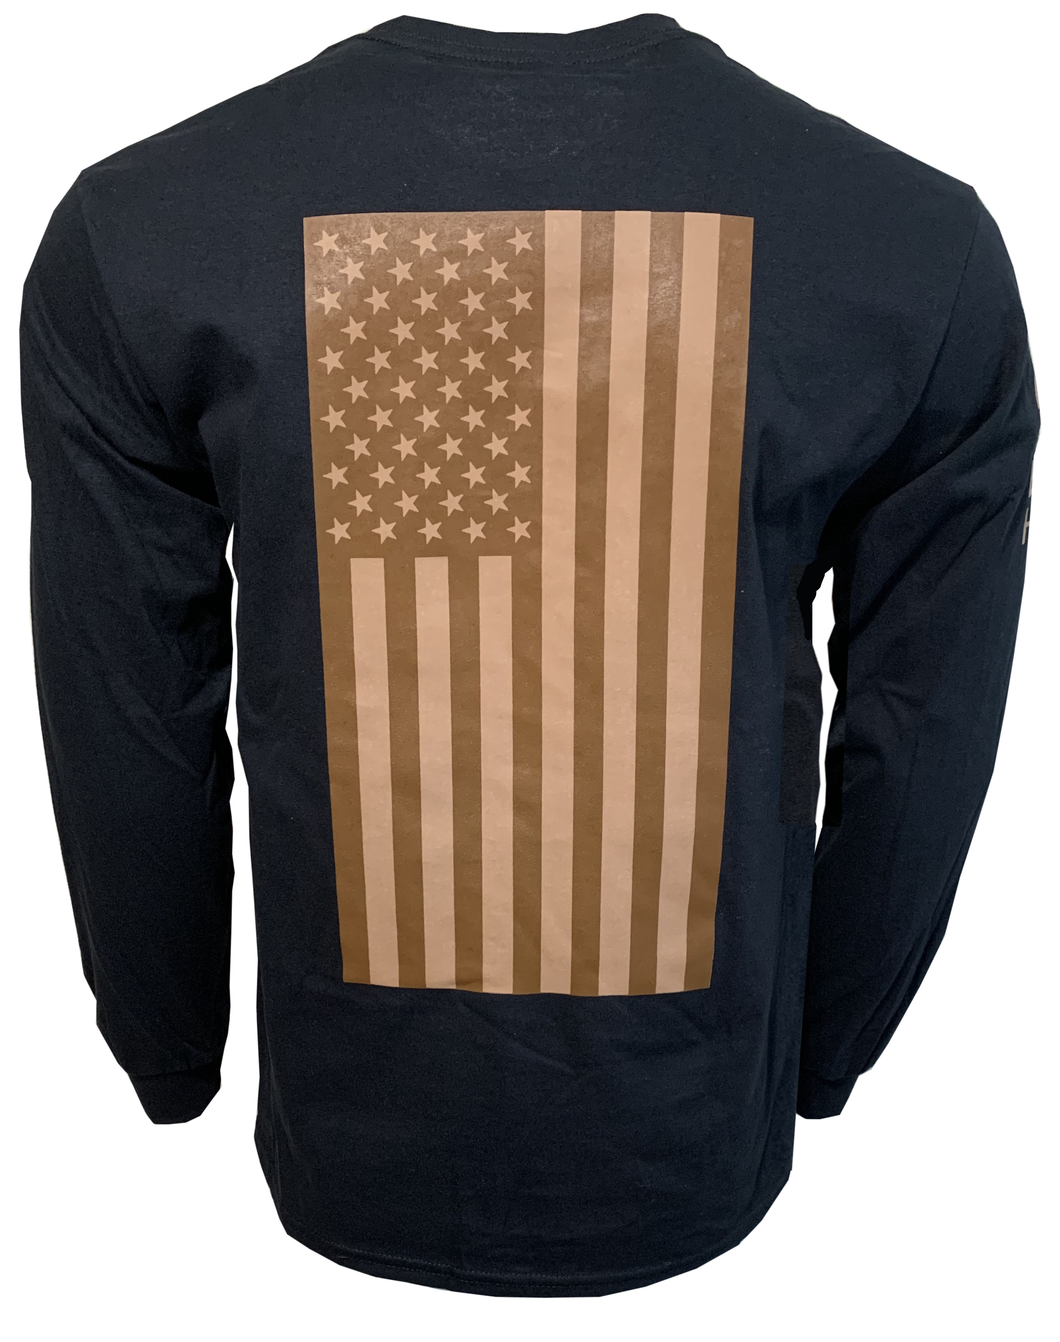 American Flag - Adult Long Sleeve T - Desert Tan on Black